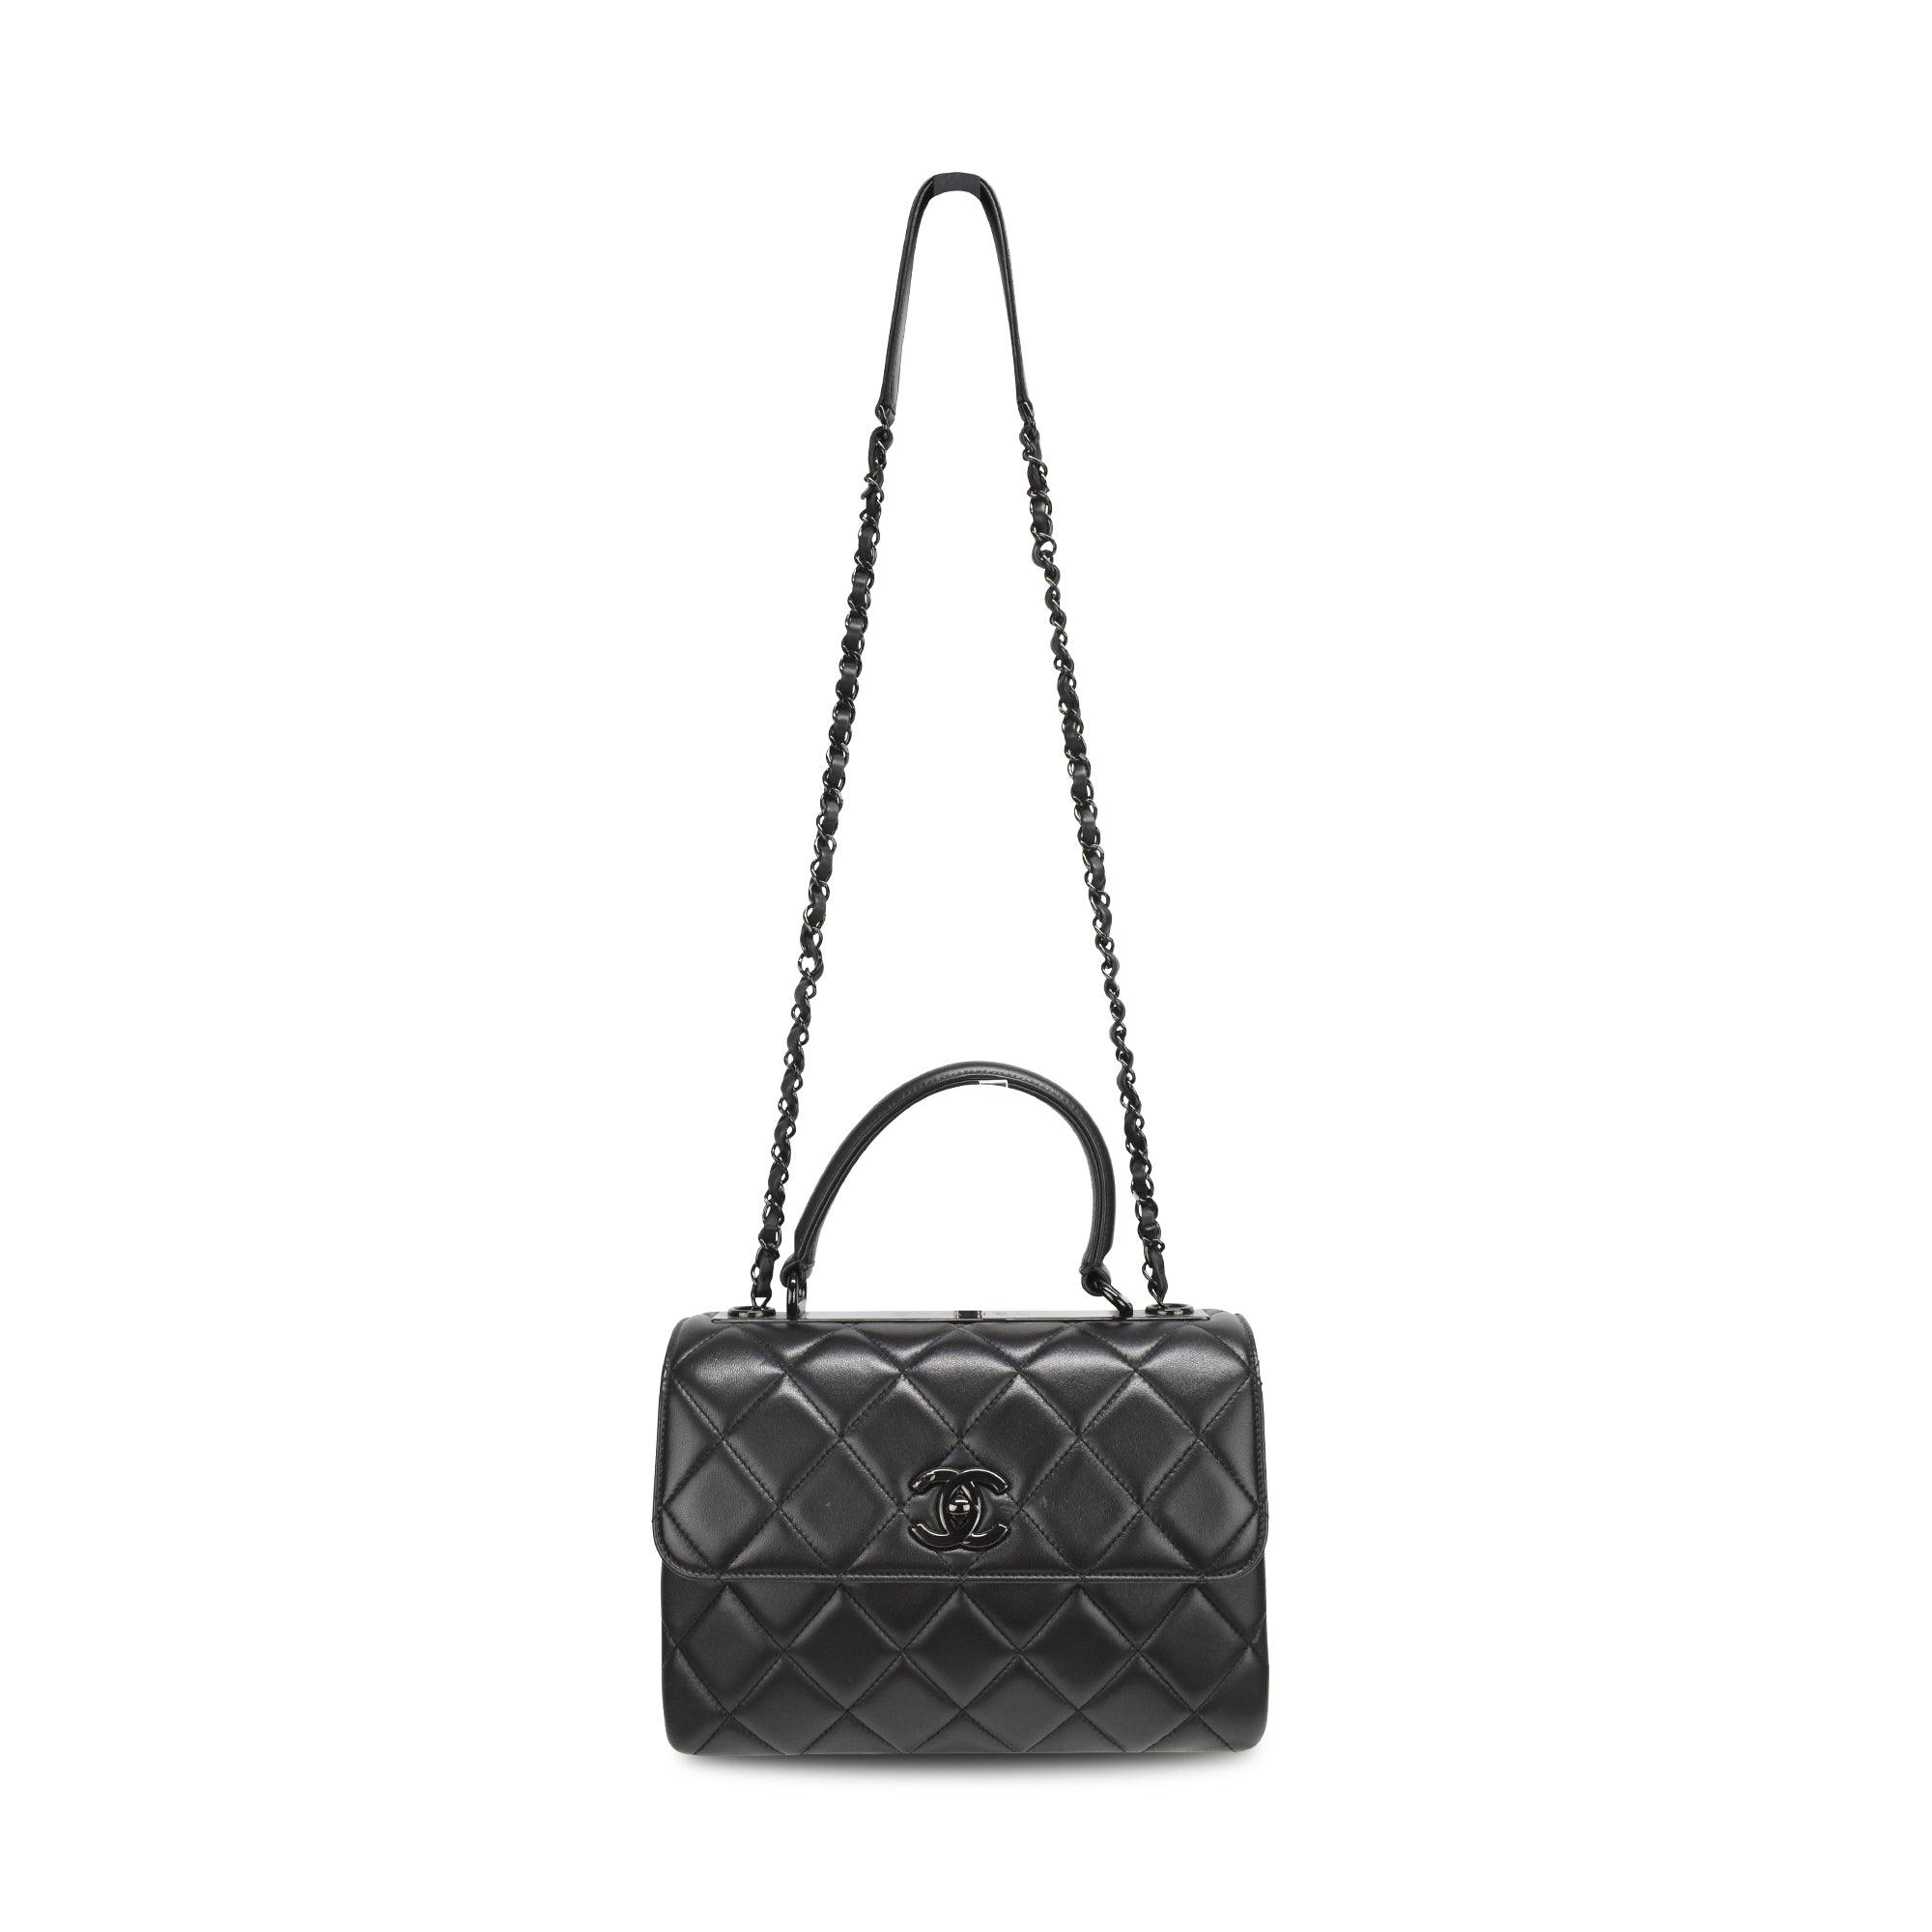 Chanel 'Trendy Small' Handbag - Fashionably Yours